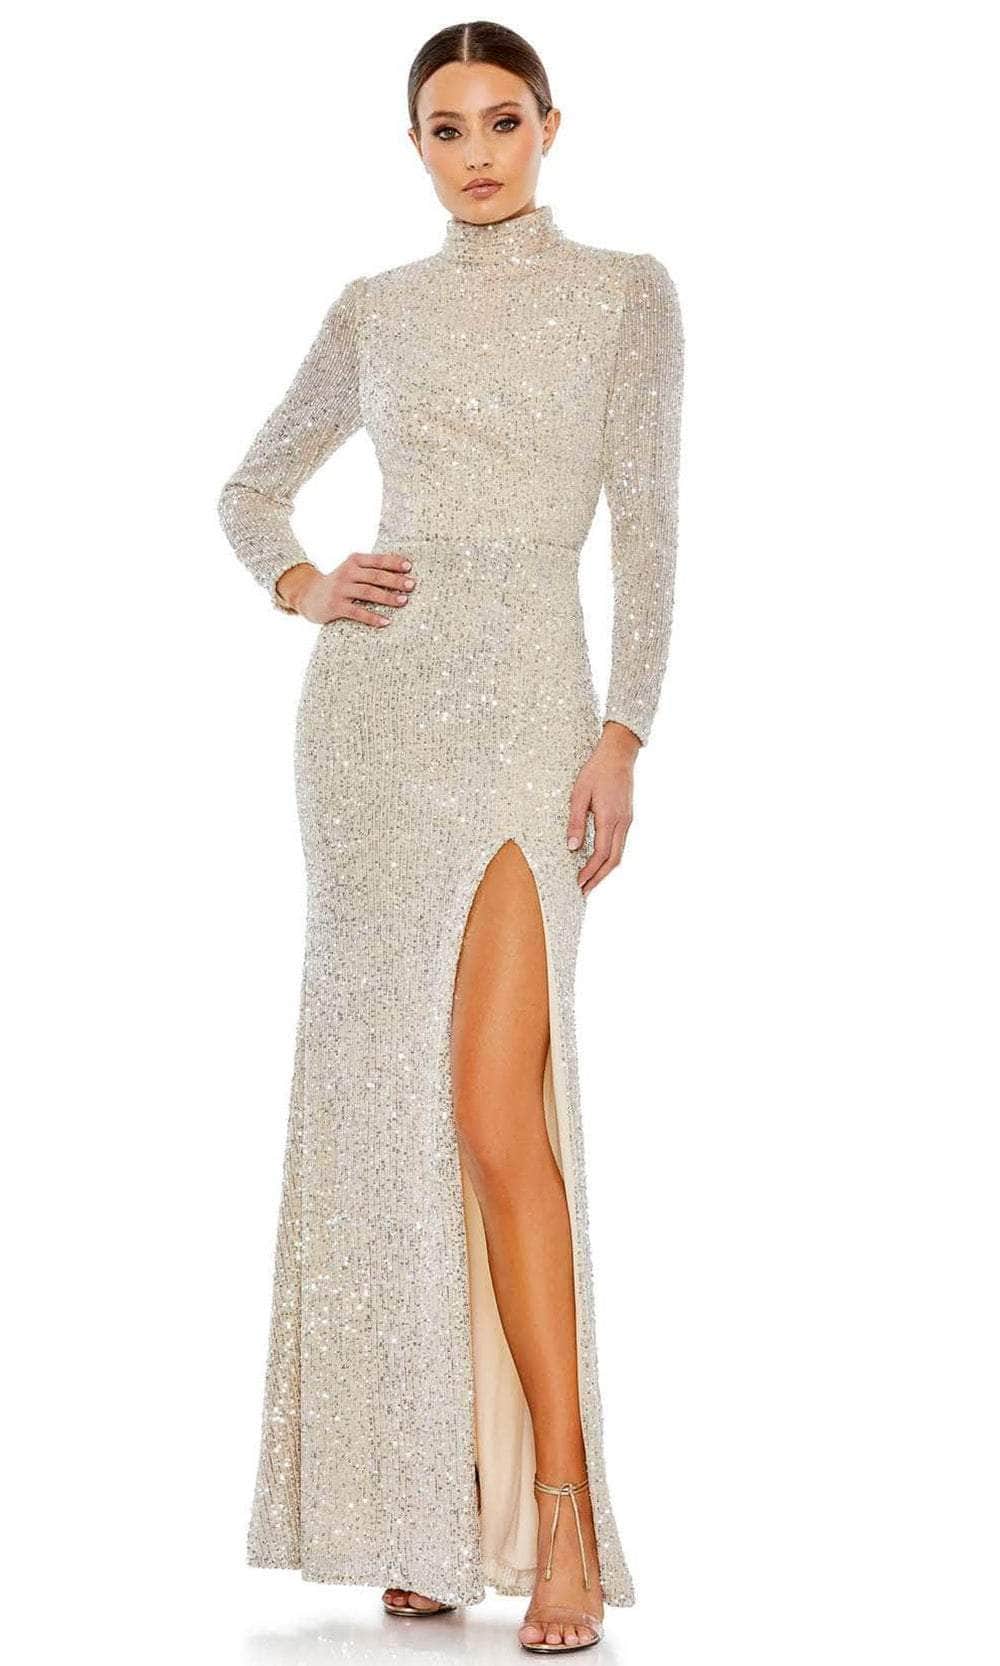 Ieena Duggal 42014 - High Neck Sequin Evening Dress Special Occasion Dress 0 / Nude/Silver